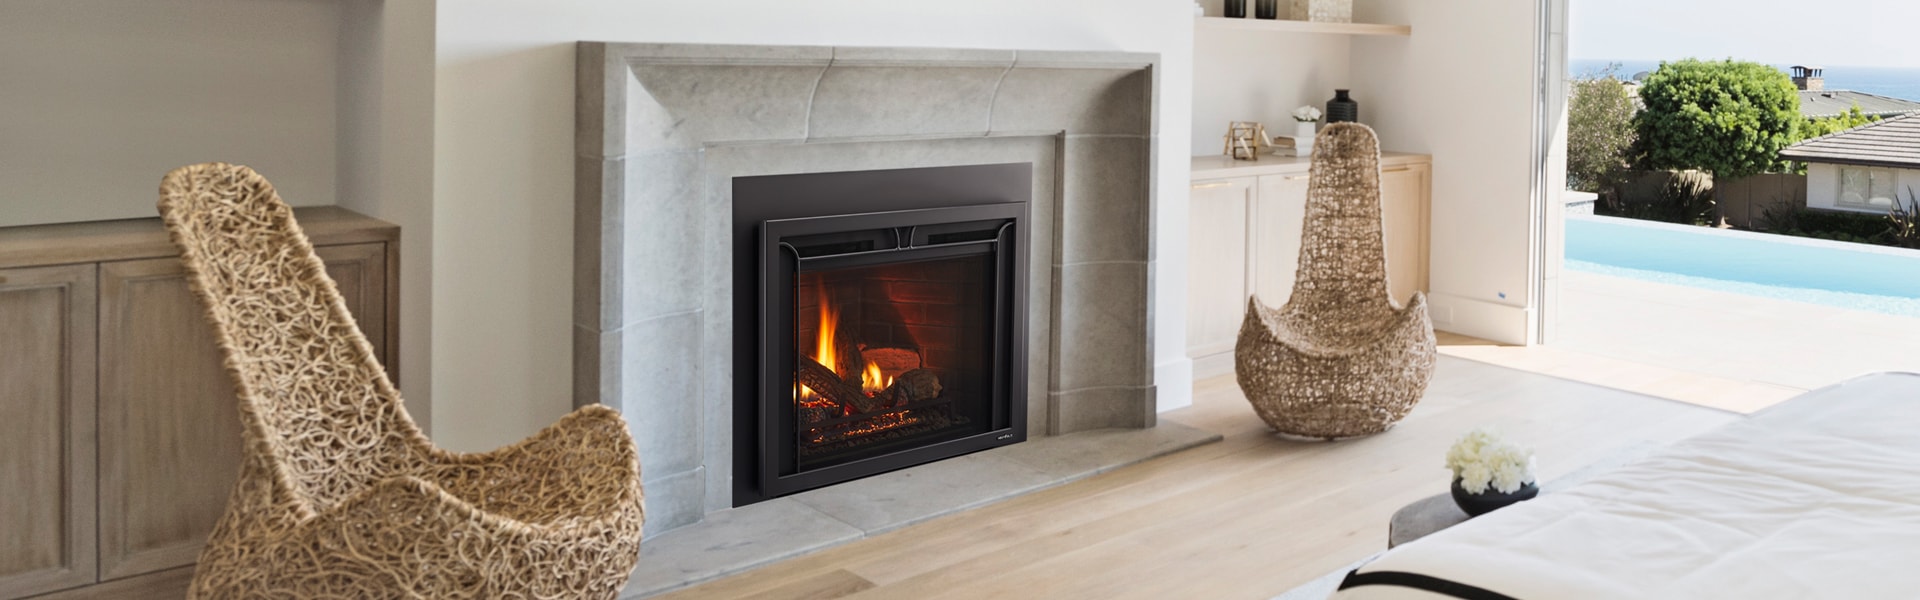 Stand Alone Propane Fireplace Inspirational Escape Gas Firebrick Inserts